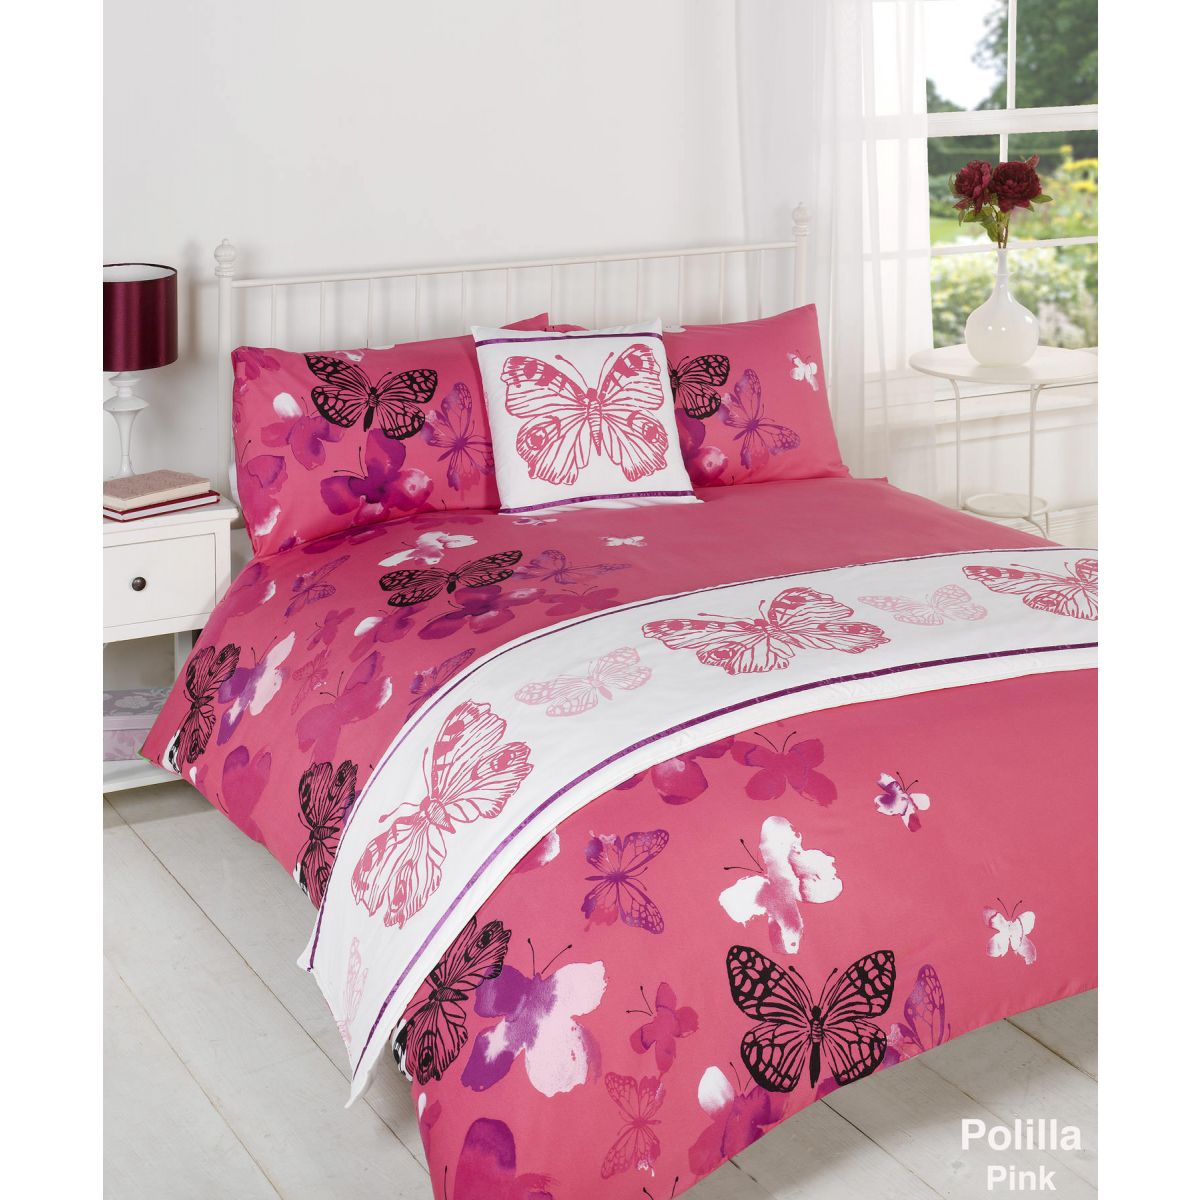 Polilla Bed In A Bag Duvet Cover Single Set - Pink